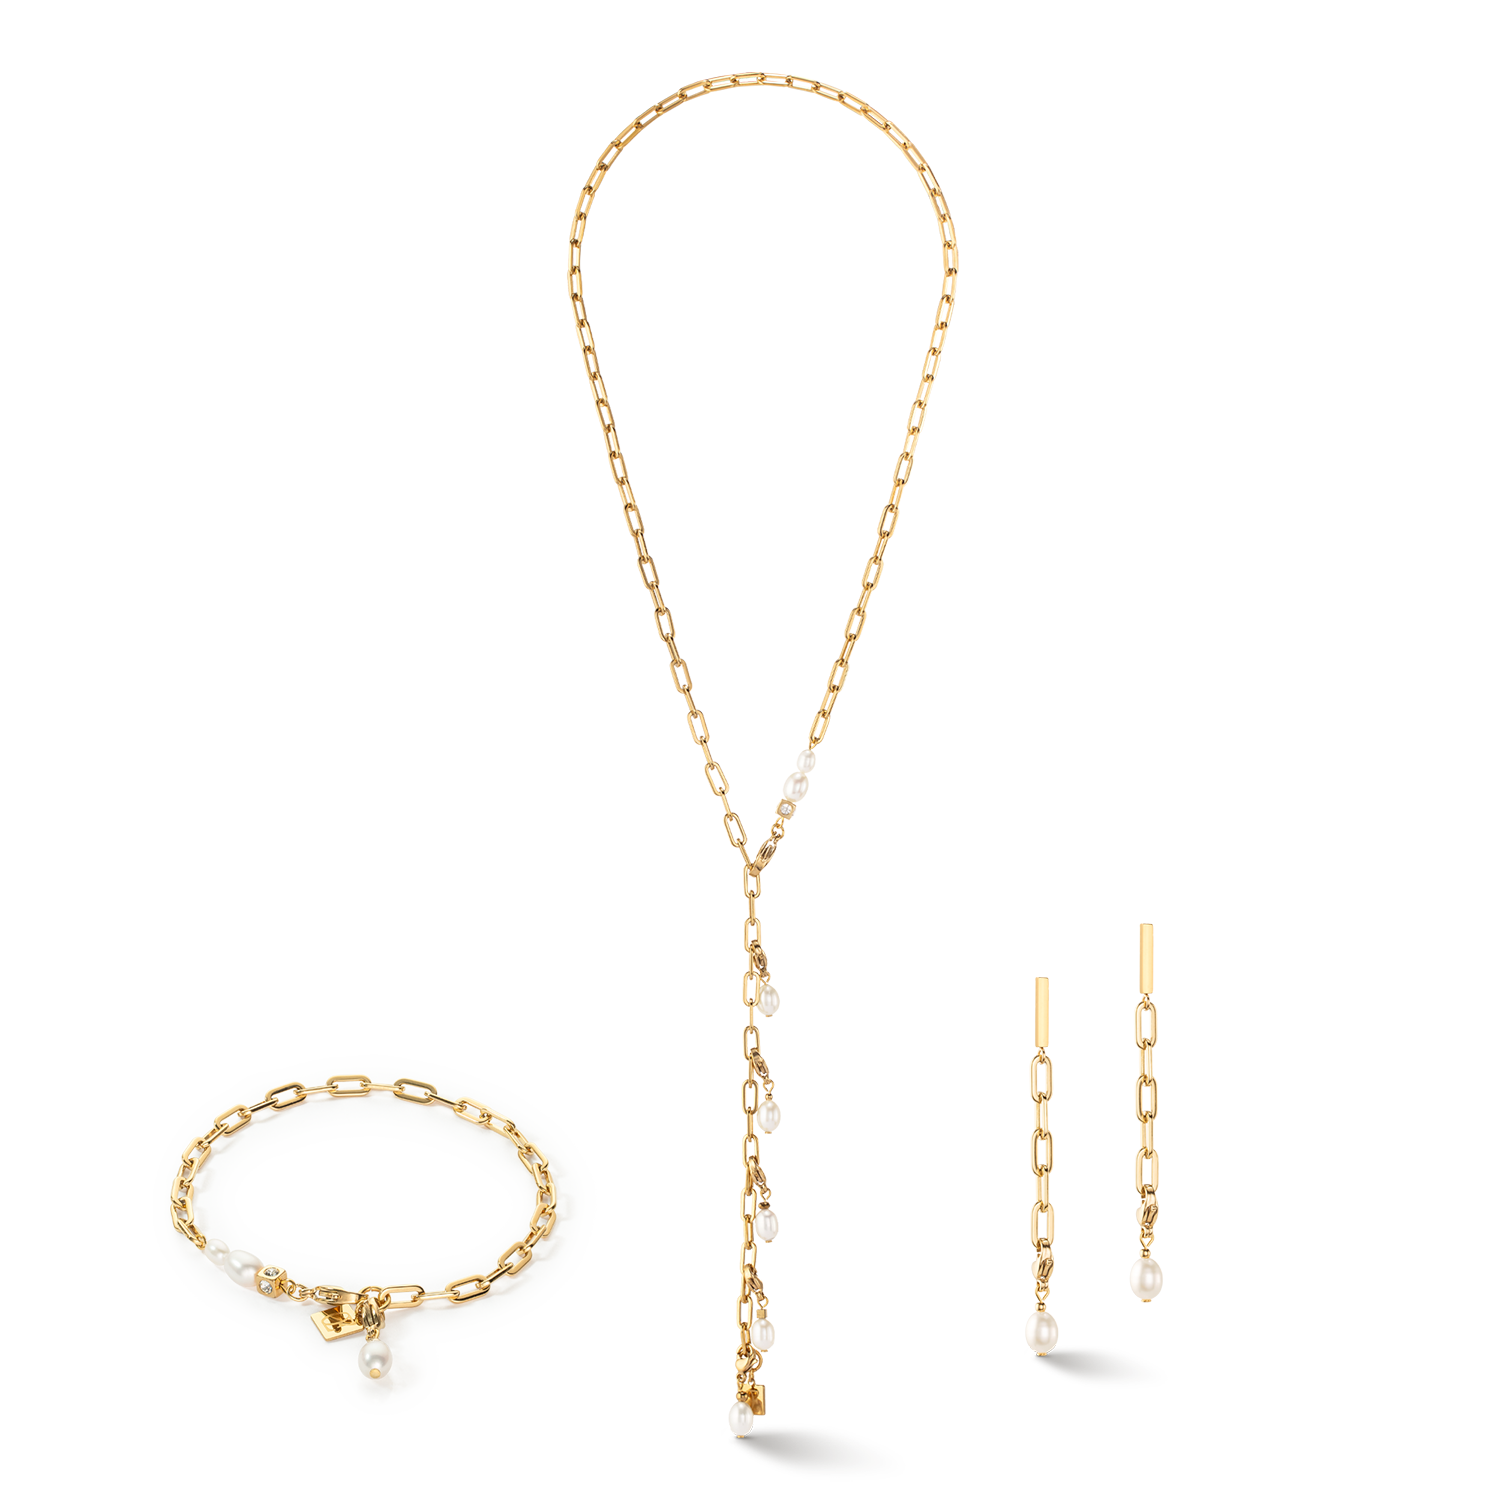 Collier Modern Chain et perles d'eau douce Charms or